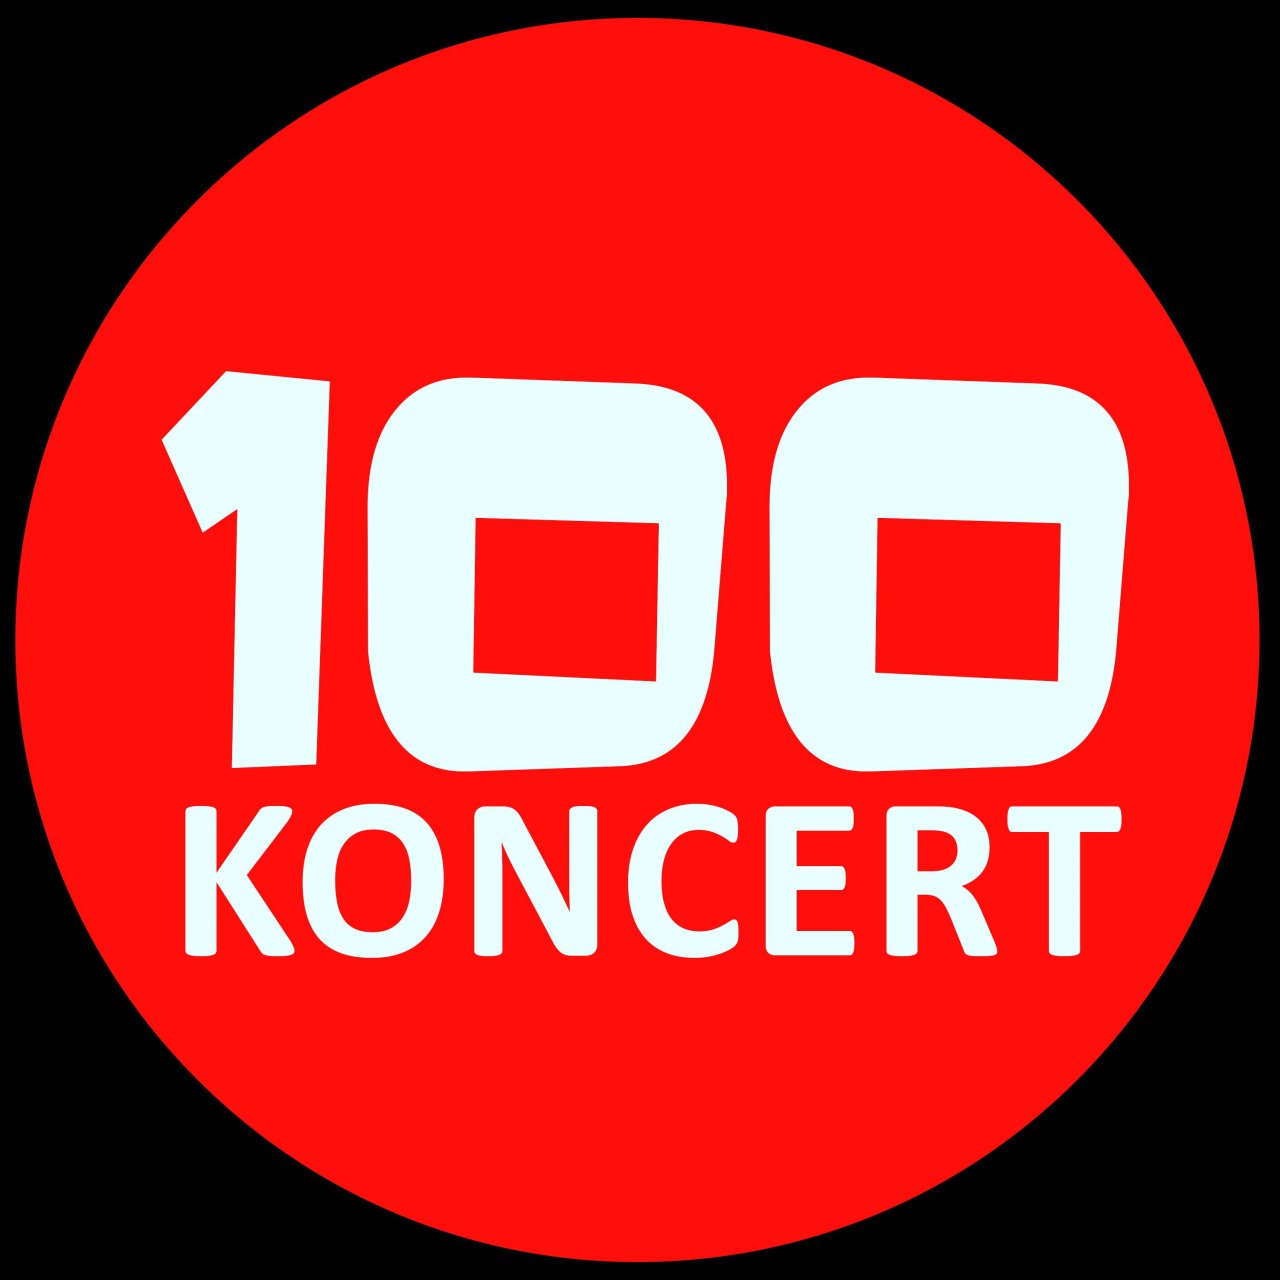 Иконка канала Расул Гитинаев 100Концерт